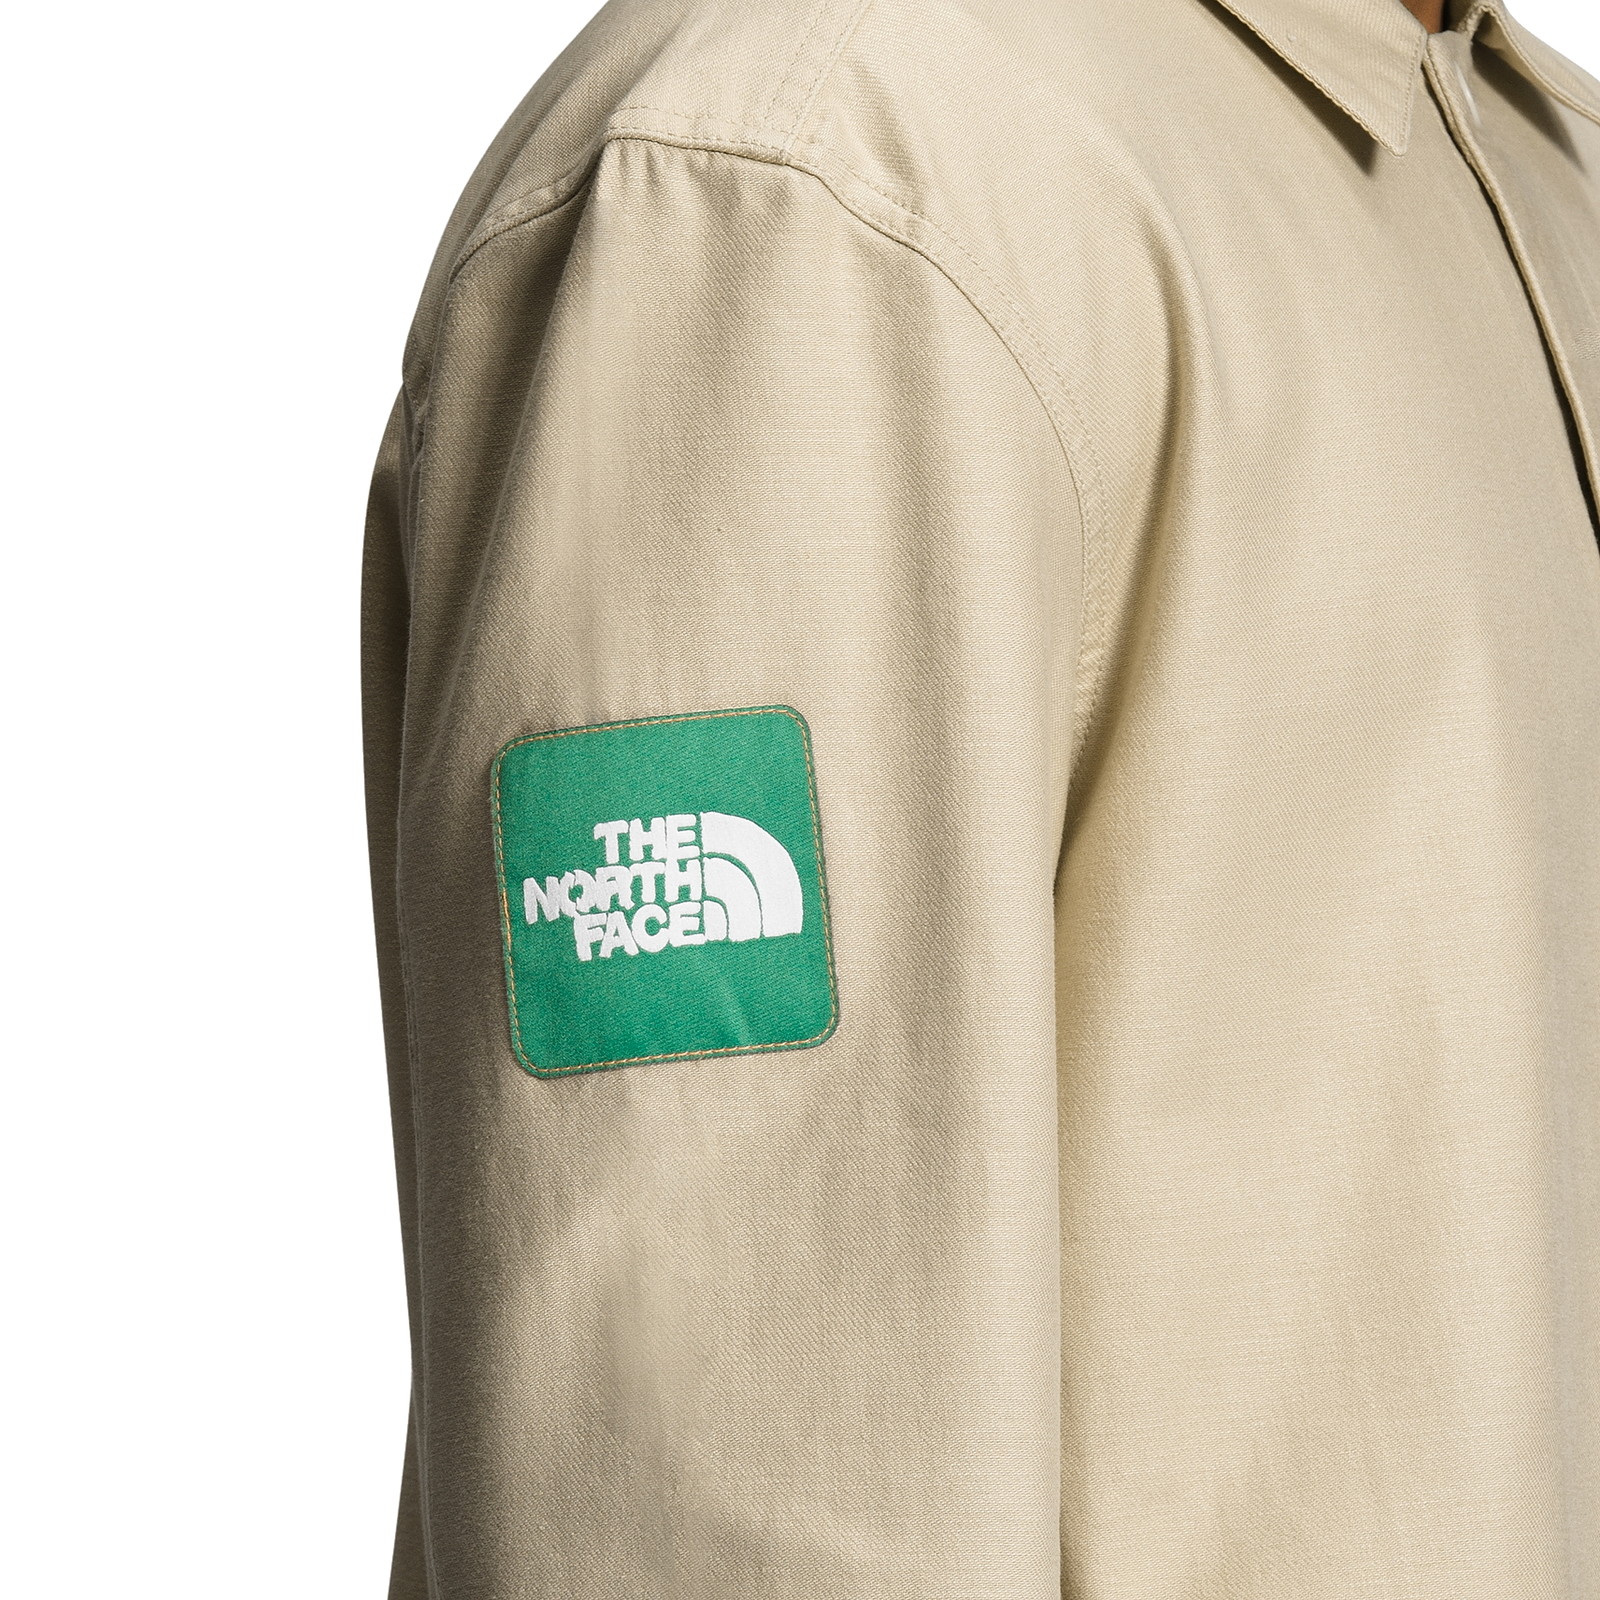 The North Face Valley Shacket Men's Gravel Cotton Shirt Jacket $150